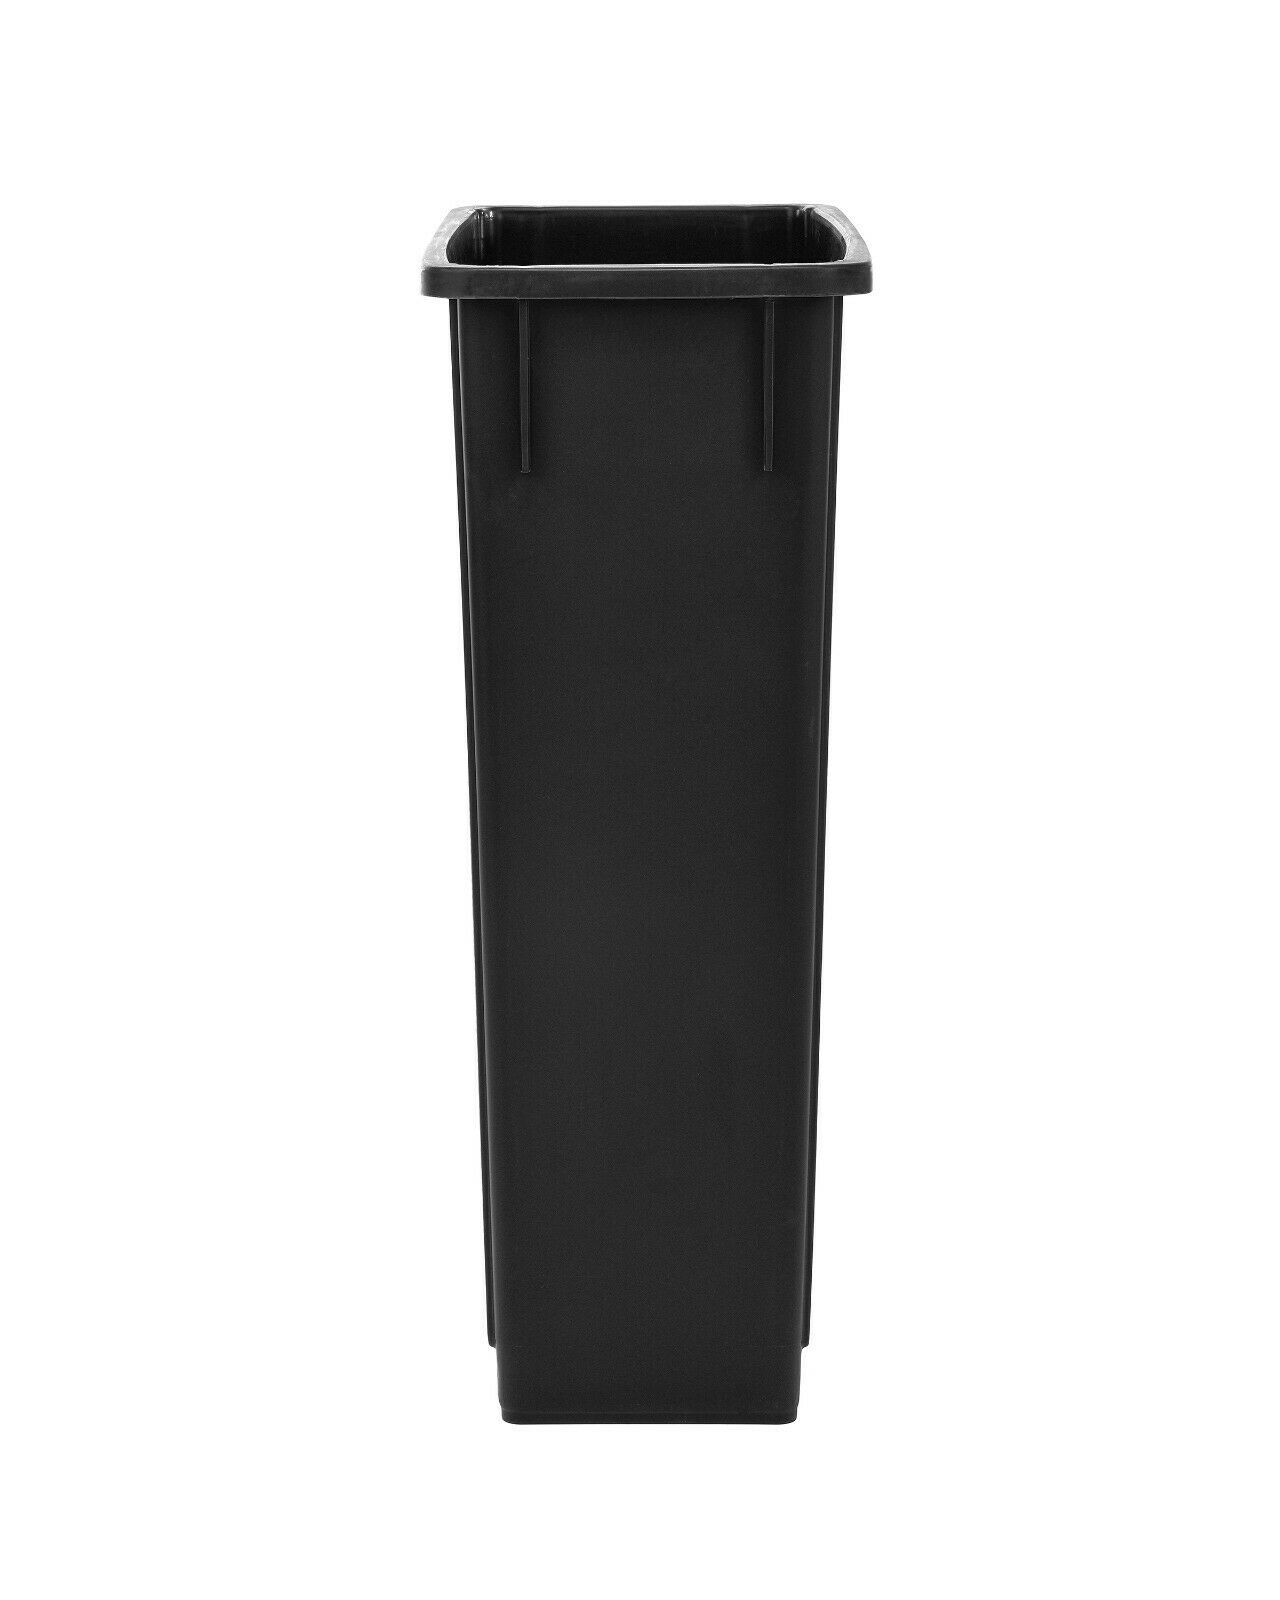 Janitorial 23 Gallon Black Slim Rectangular Trash Can